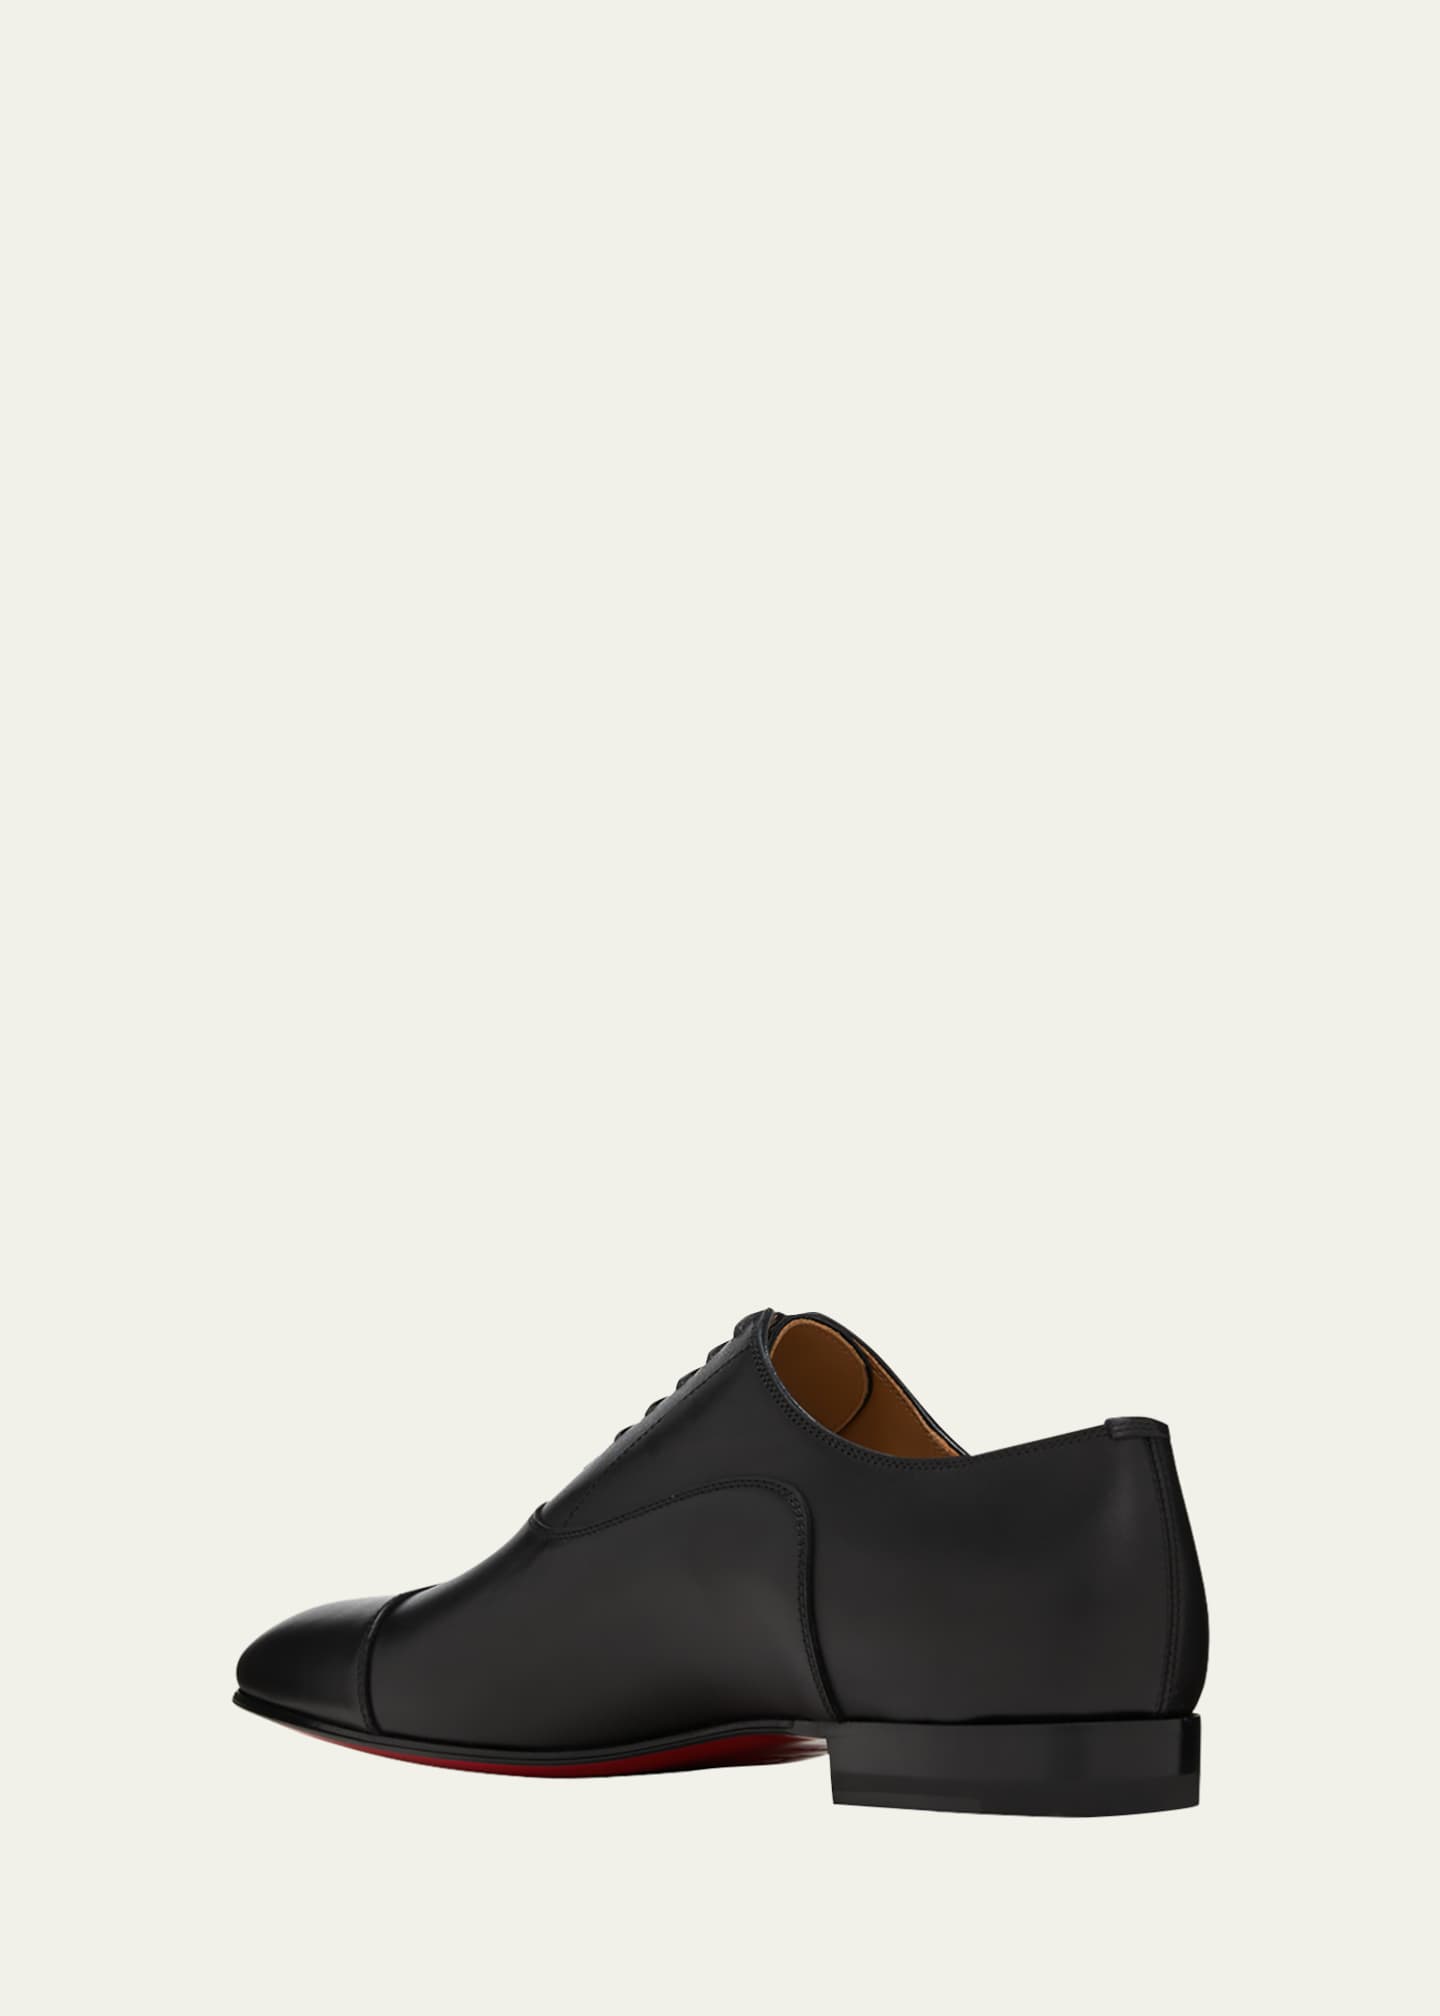 Christian Louboutin Greggo Lace-Up Oxford Shoes